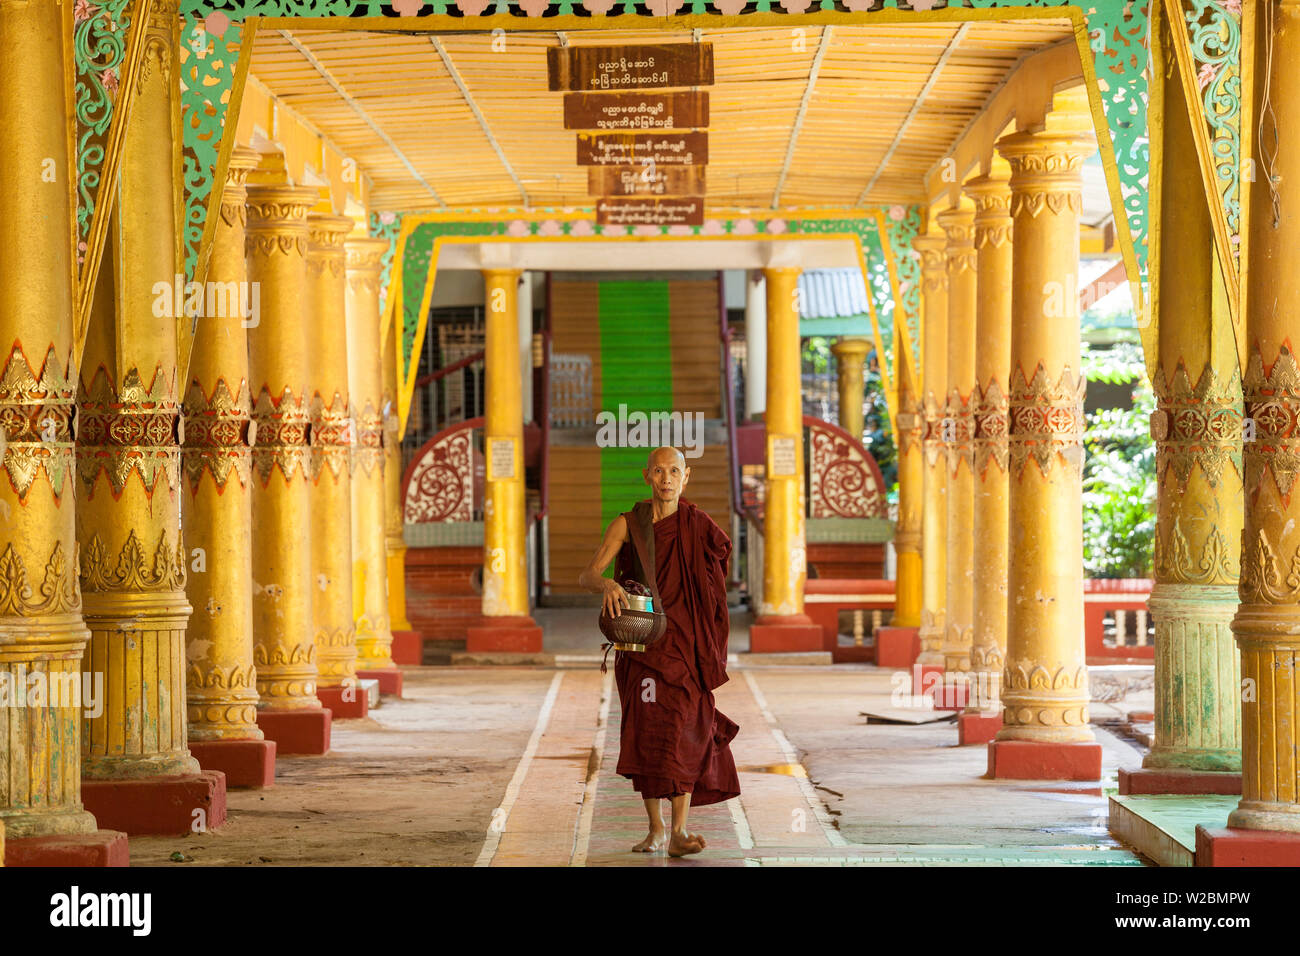 Monk, Kha Khat Wain Kyaung monastery, Bago (Pegu), Burma Stock Photo